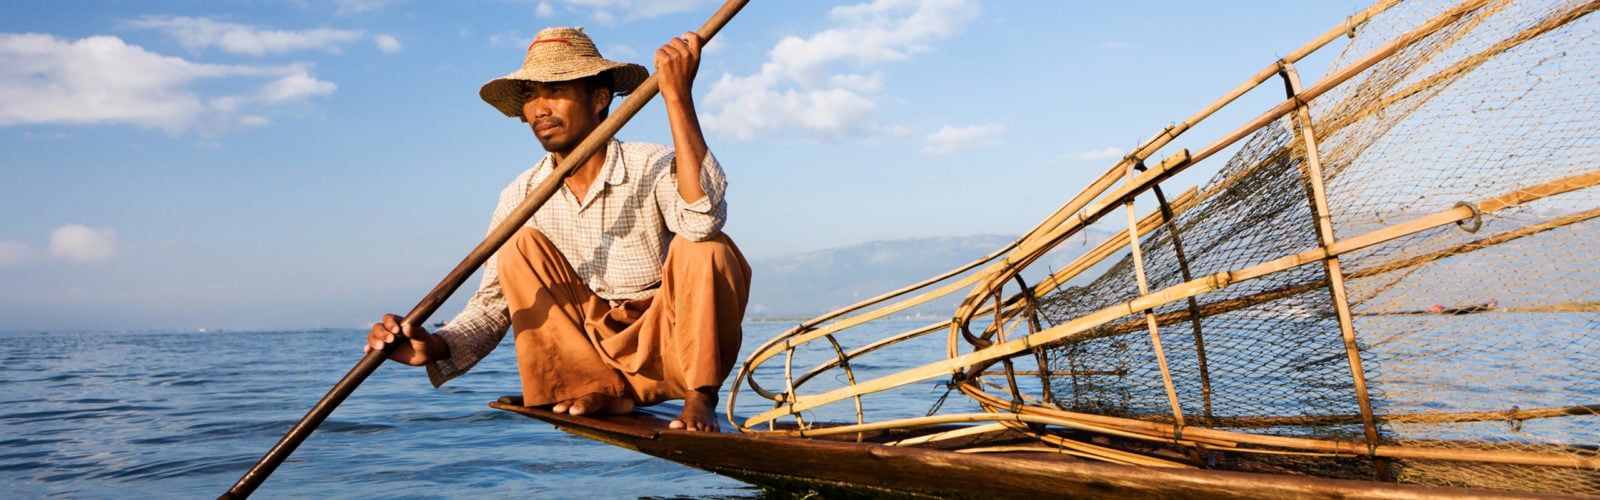 inle-lake-fisherman-myanmar